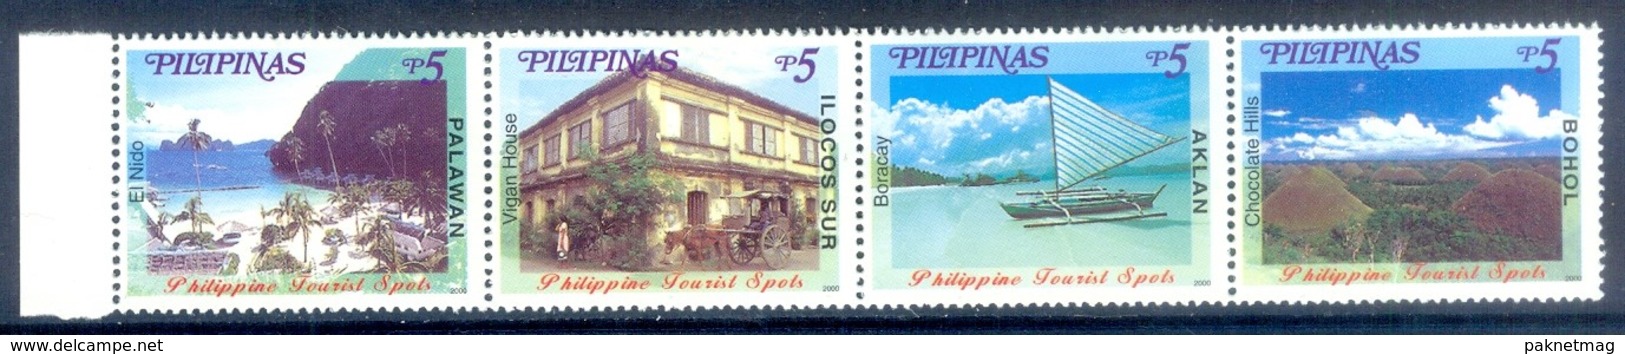 M145- Philippines Philippinen Pilipinas Filipinas 2000. Tourist Ship Plants Tree Sports. - Philippines